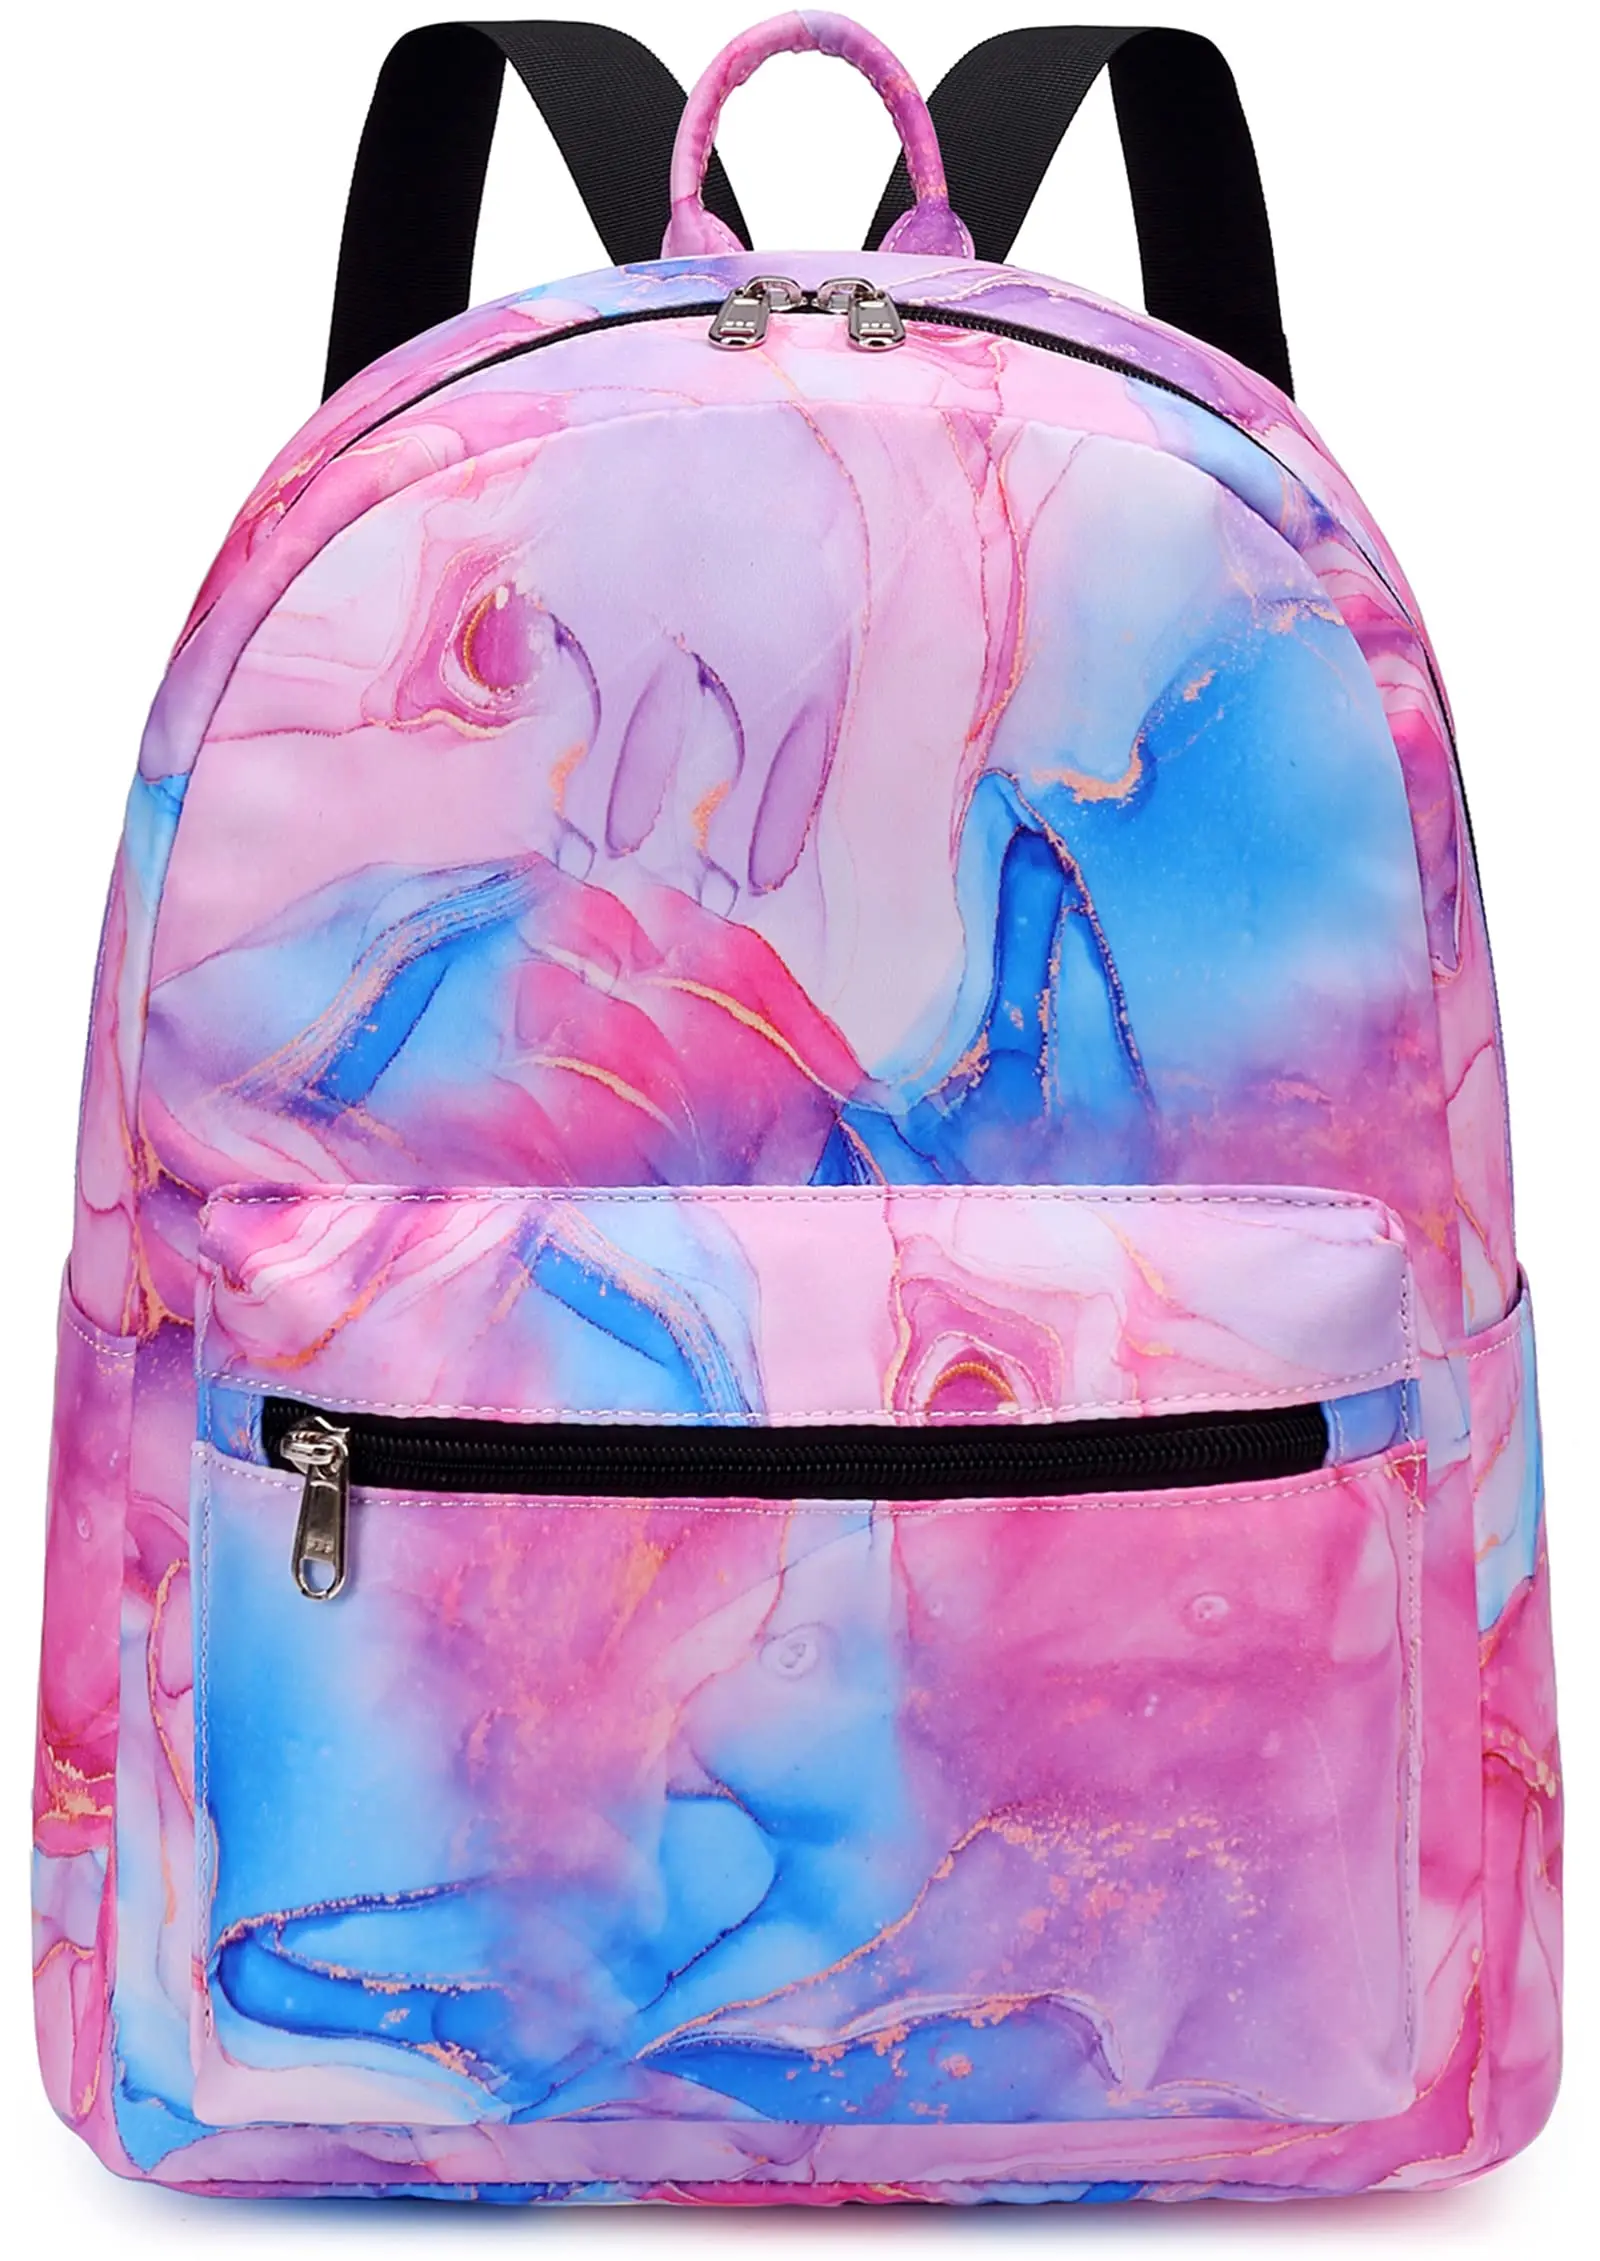 Source Mini Backpack Girls Cute Small Backpack Purse for Women